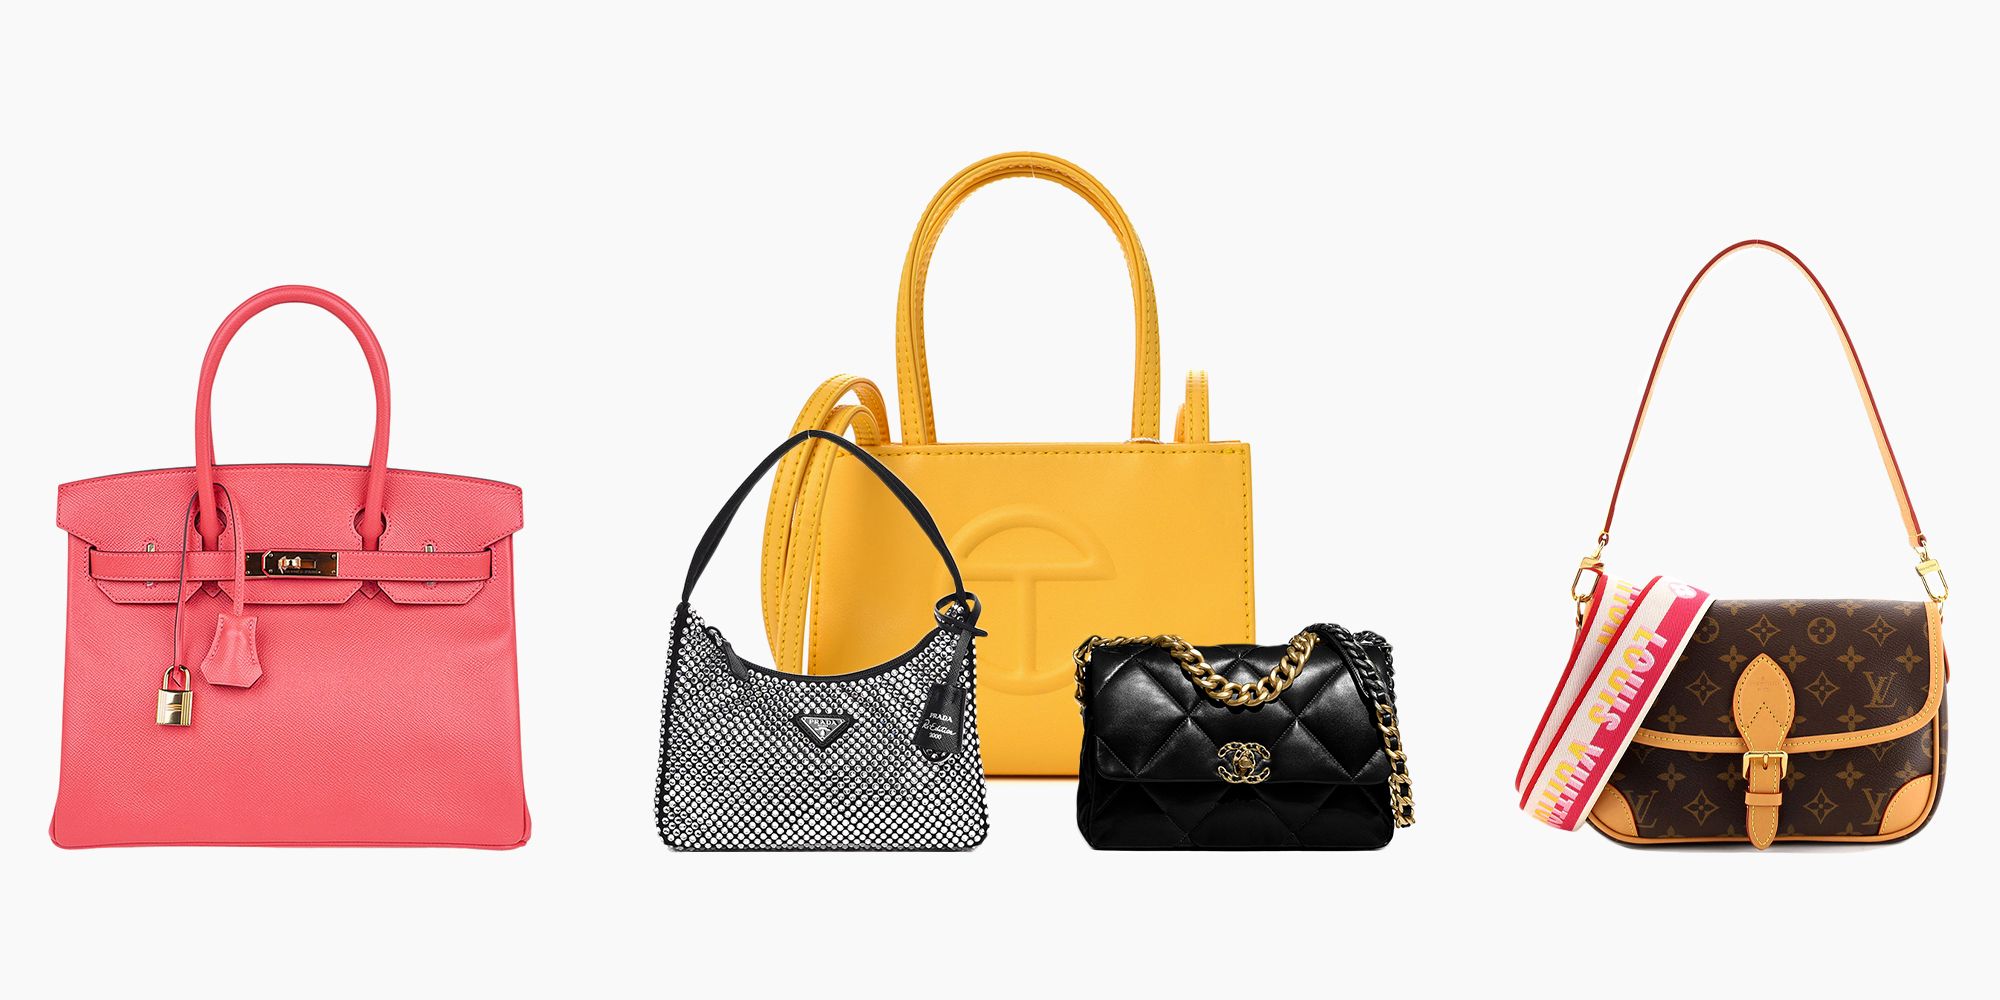 Womens Purses & Handbags | Kohl's